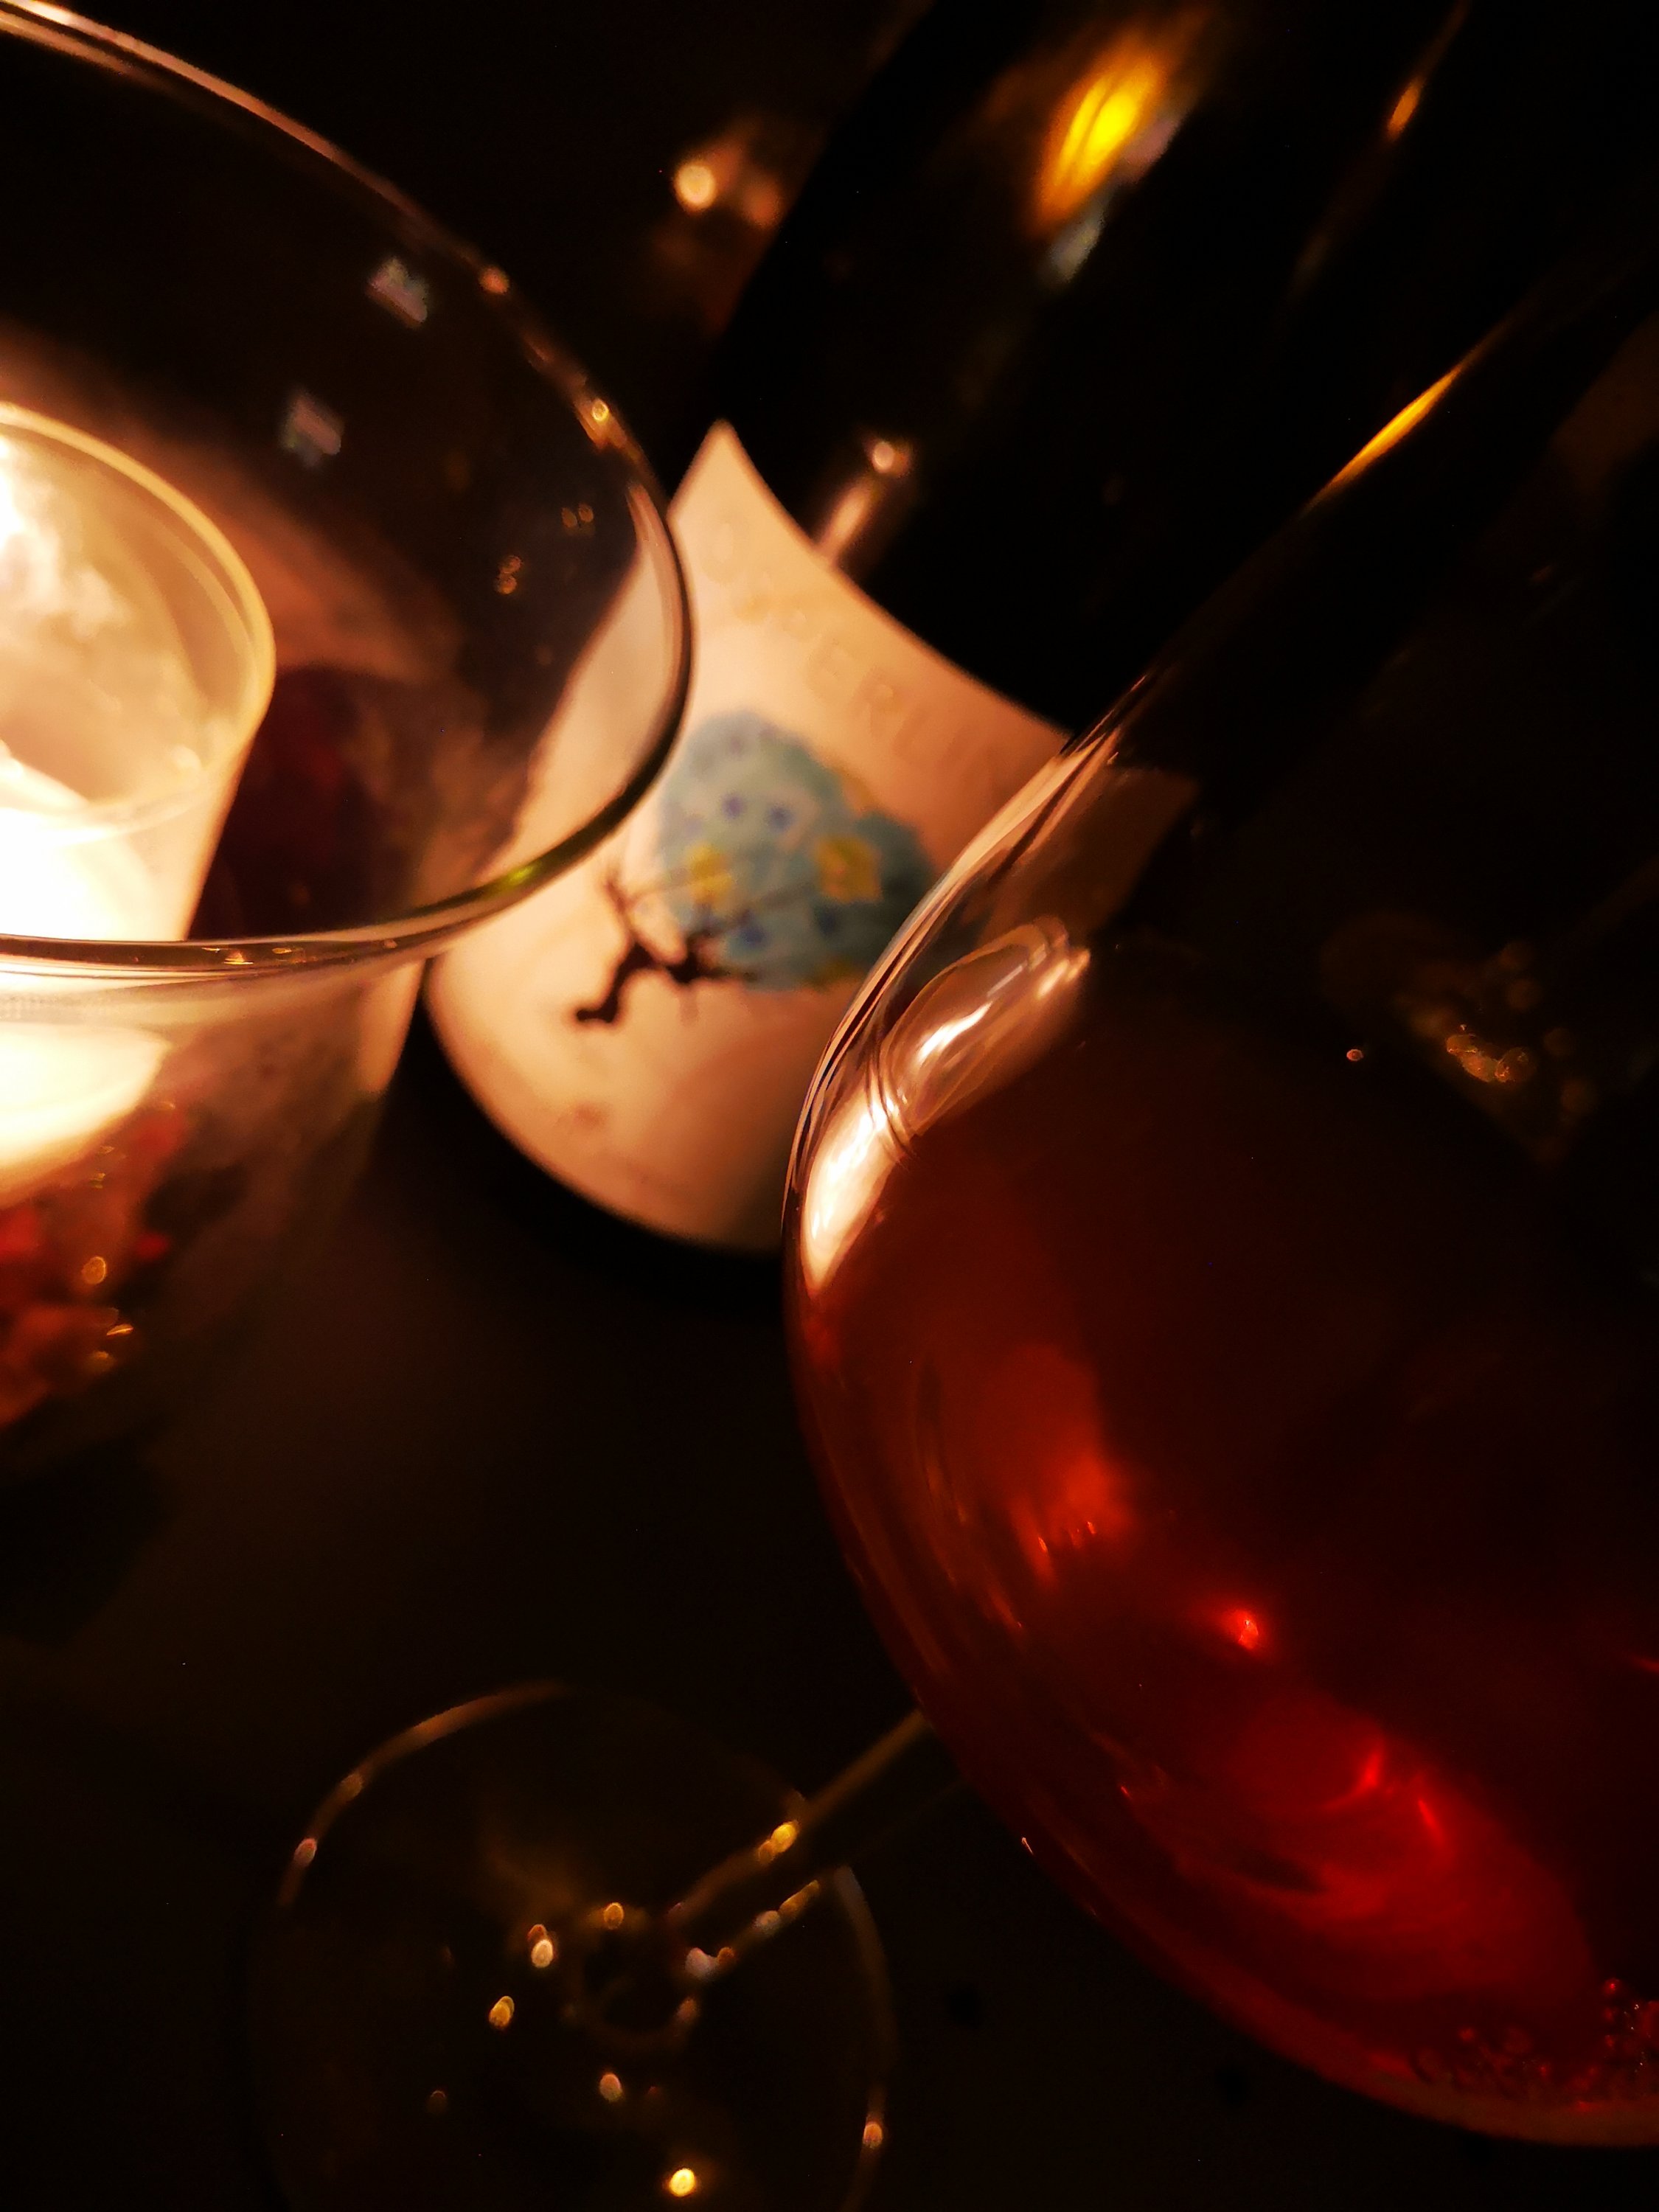 Enonauta/Degustazione di Vino #099 - review - Pinot Gris Osperling 2019 - Domaine Gross/Merlot 2013 di Slavcek